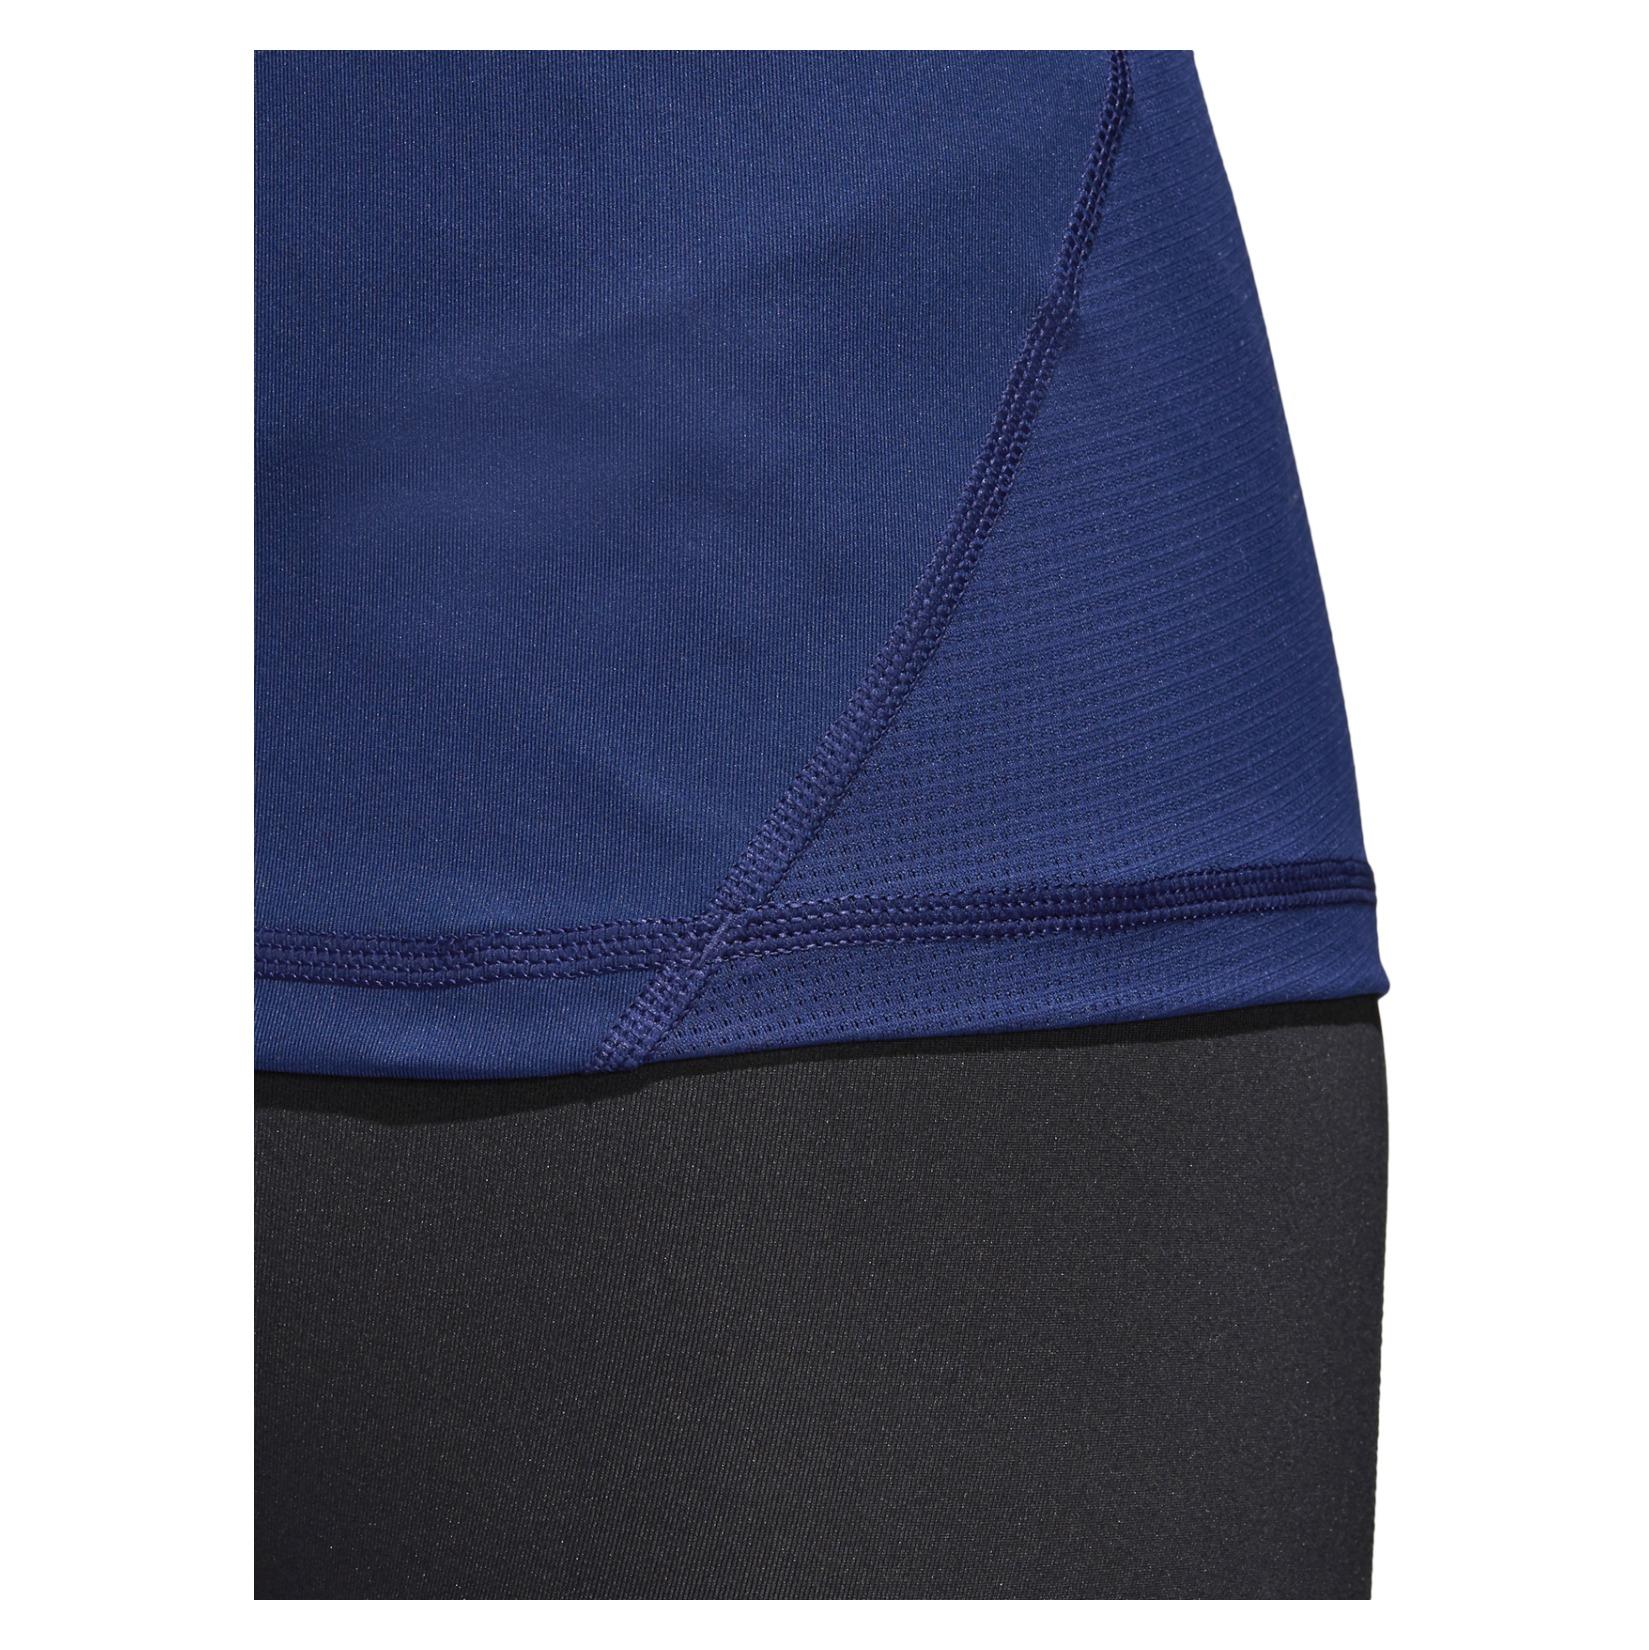 Adidas Alphaskin Long Sleeve Baselayer Dark Blue